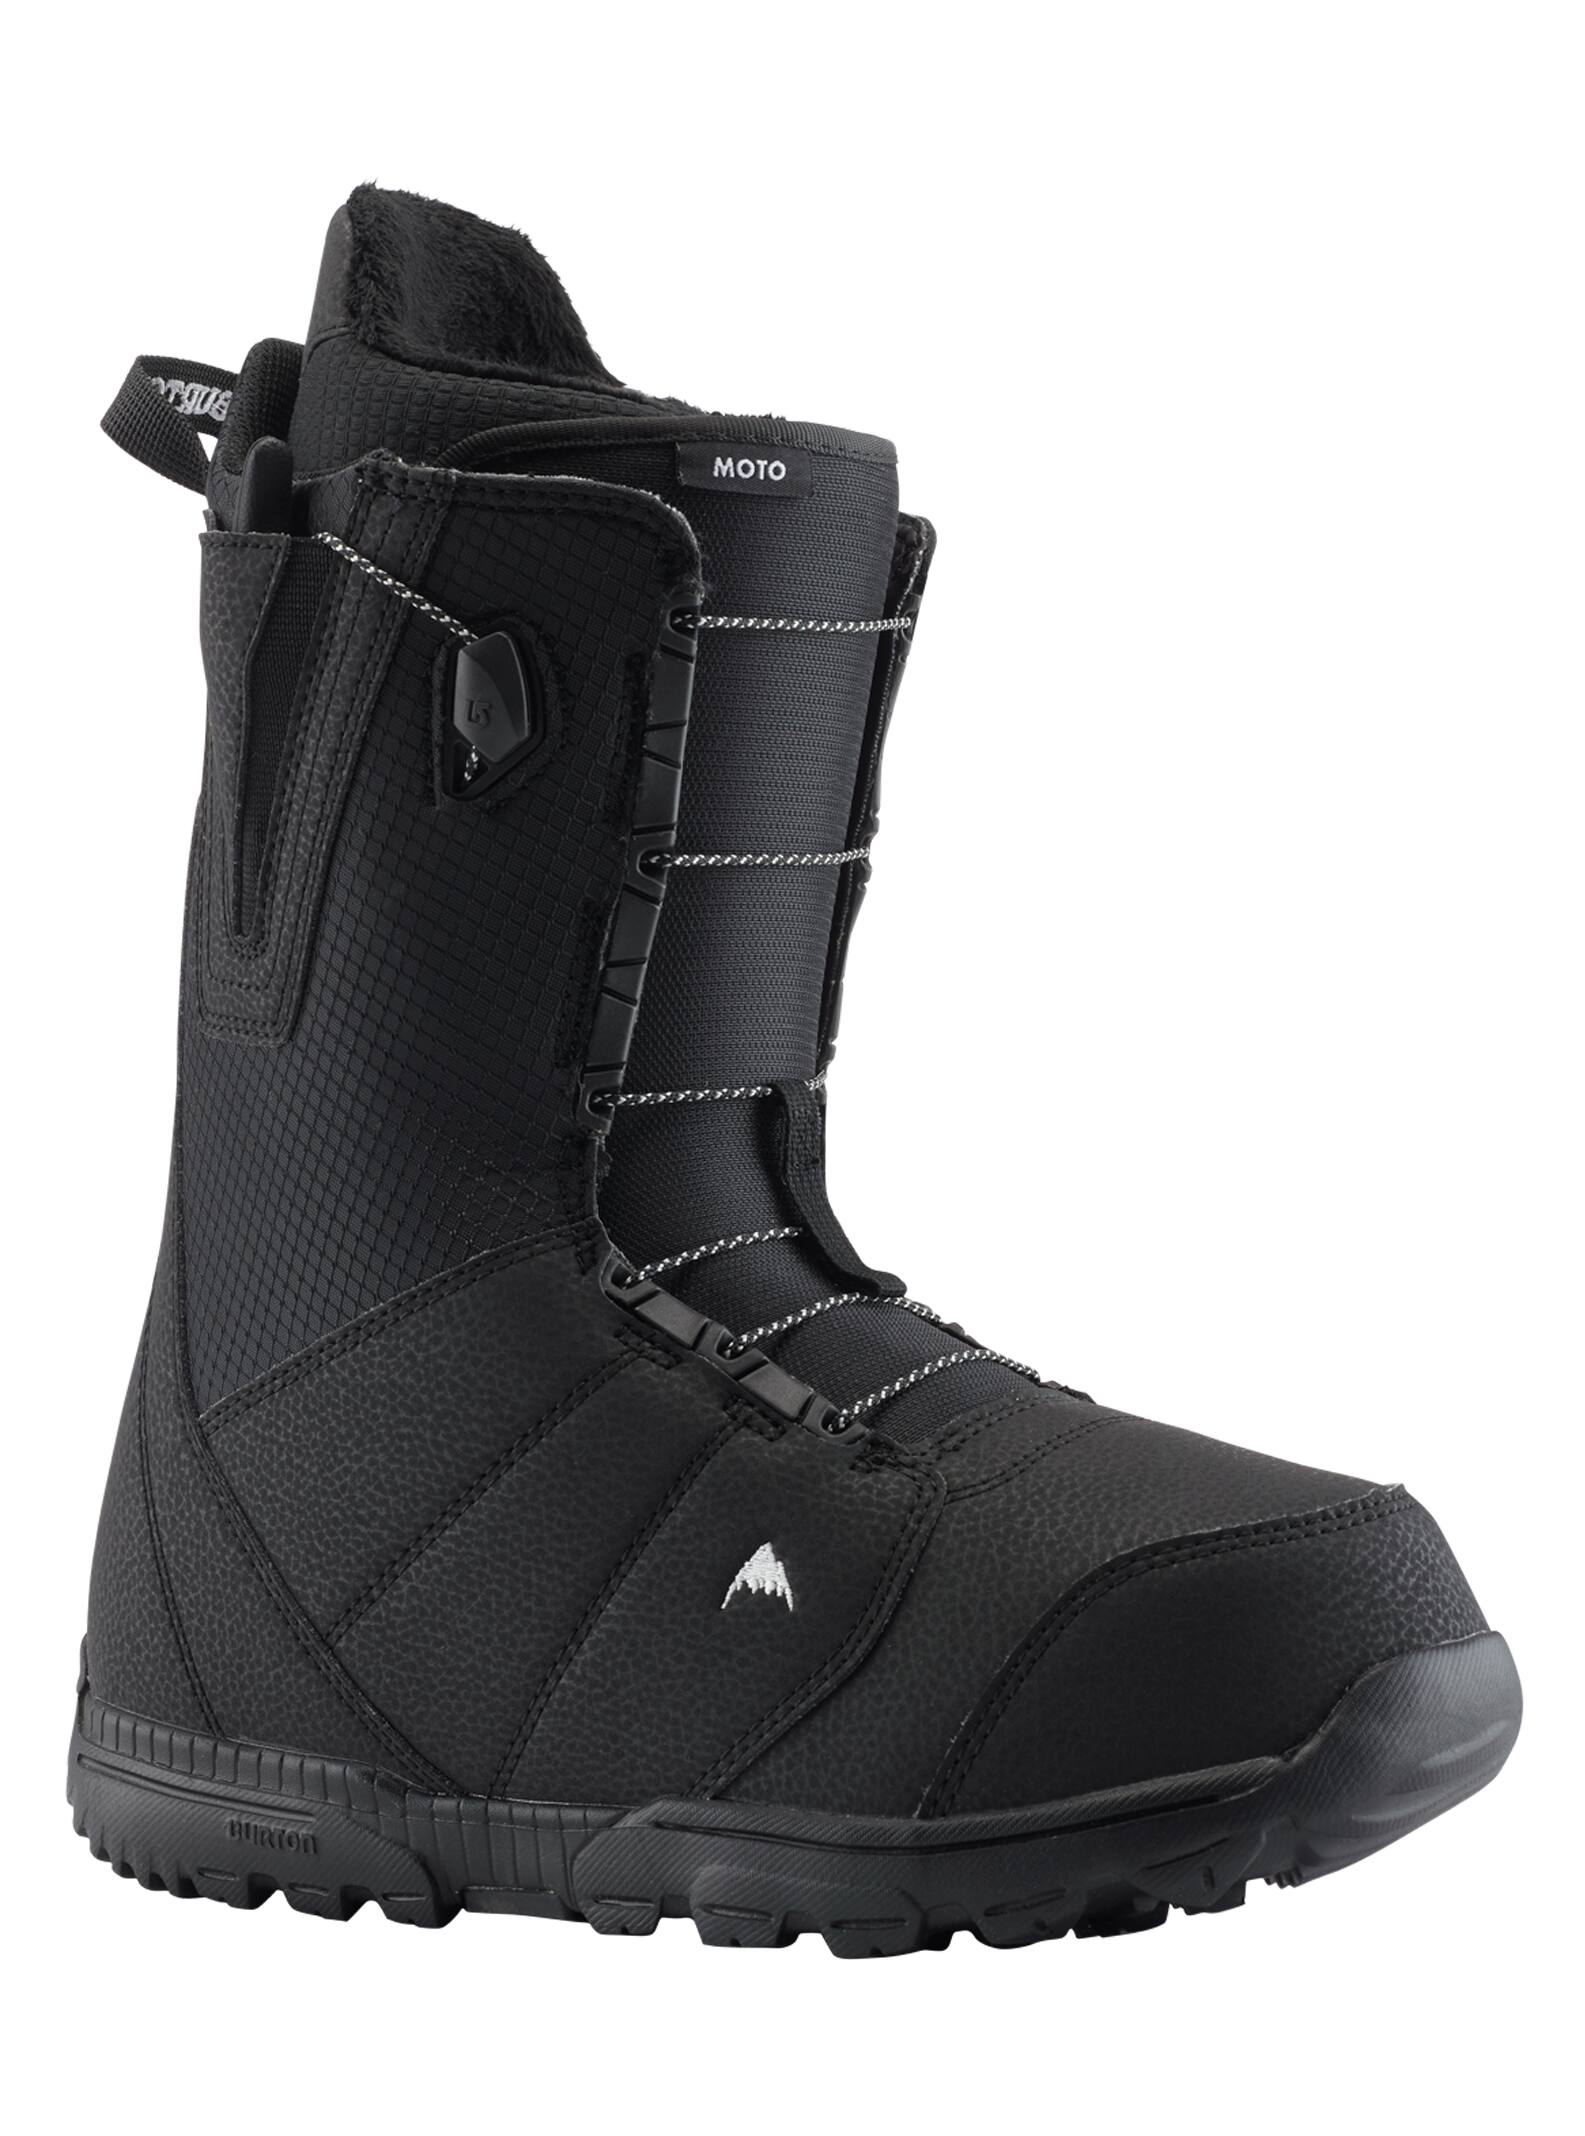 Burton - Boots de snowboard Moto homme, Black, 7.0